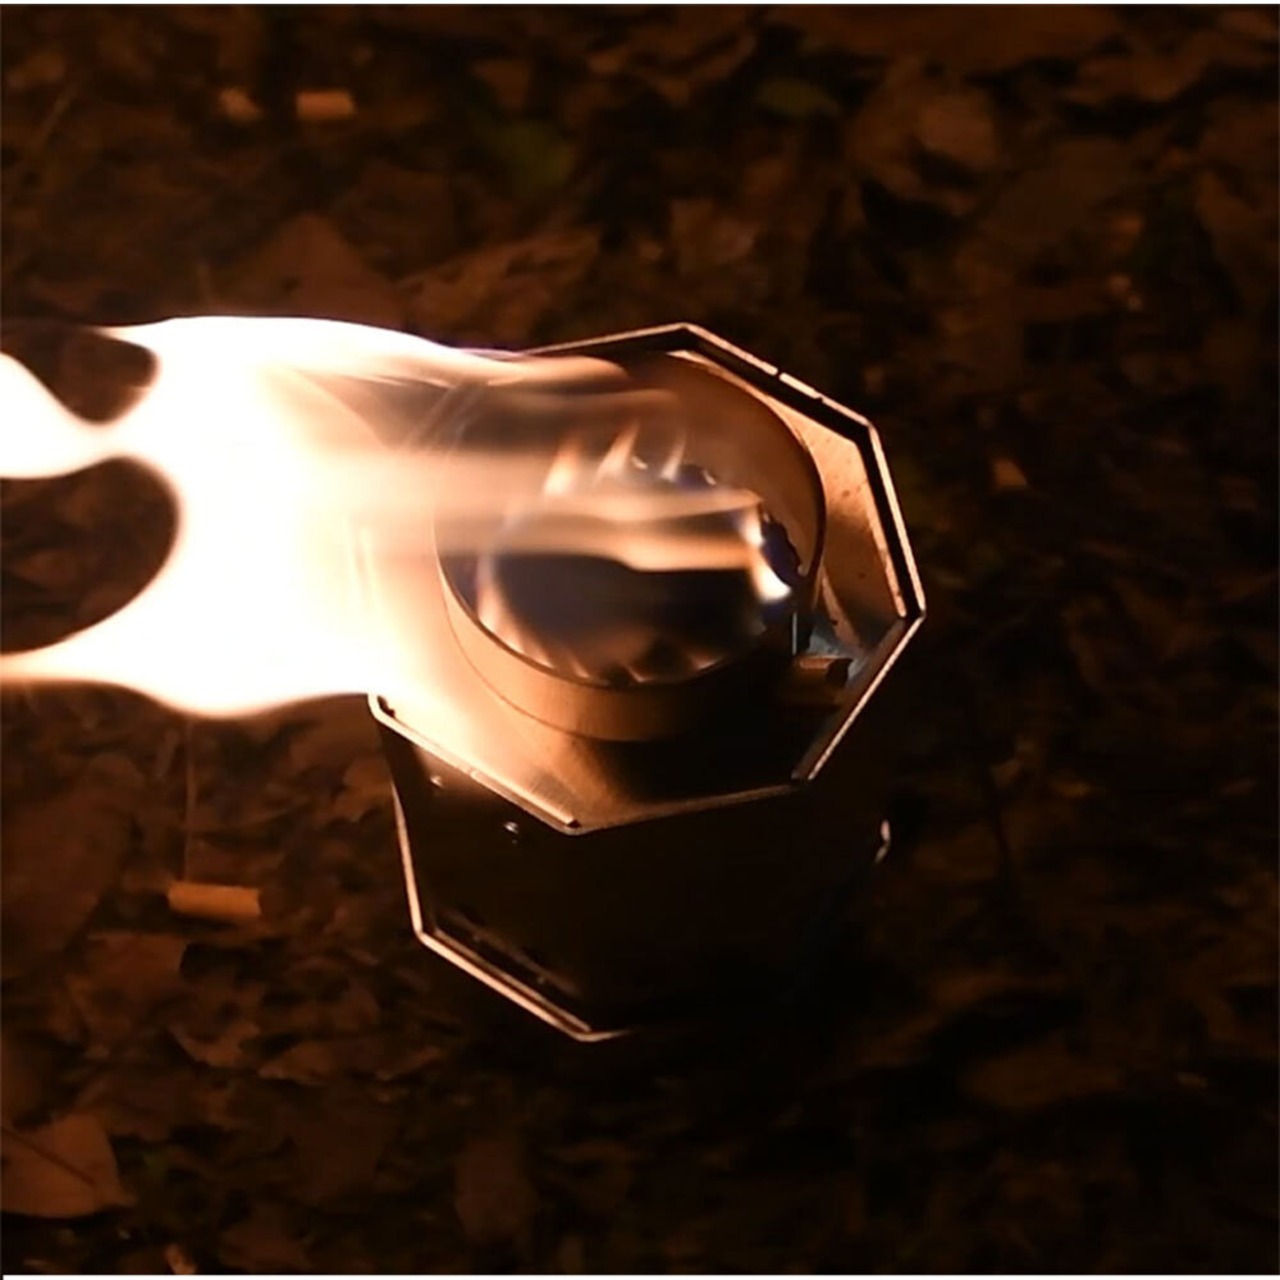 Div-Horizon ディーアイブイ・ホリゾン　mini Revo Flame 二次燃焼 焚き火台